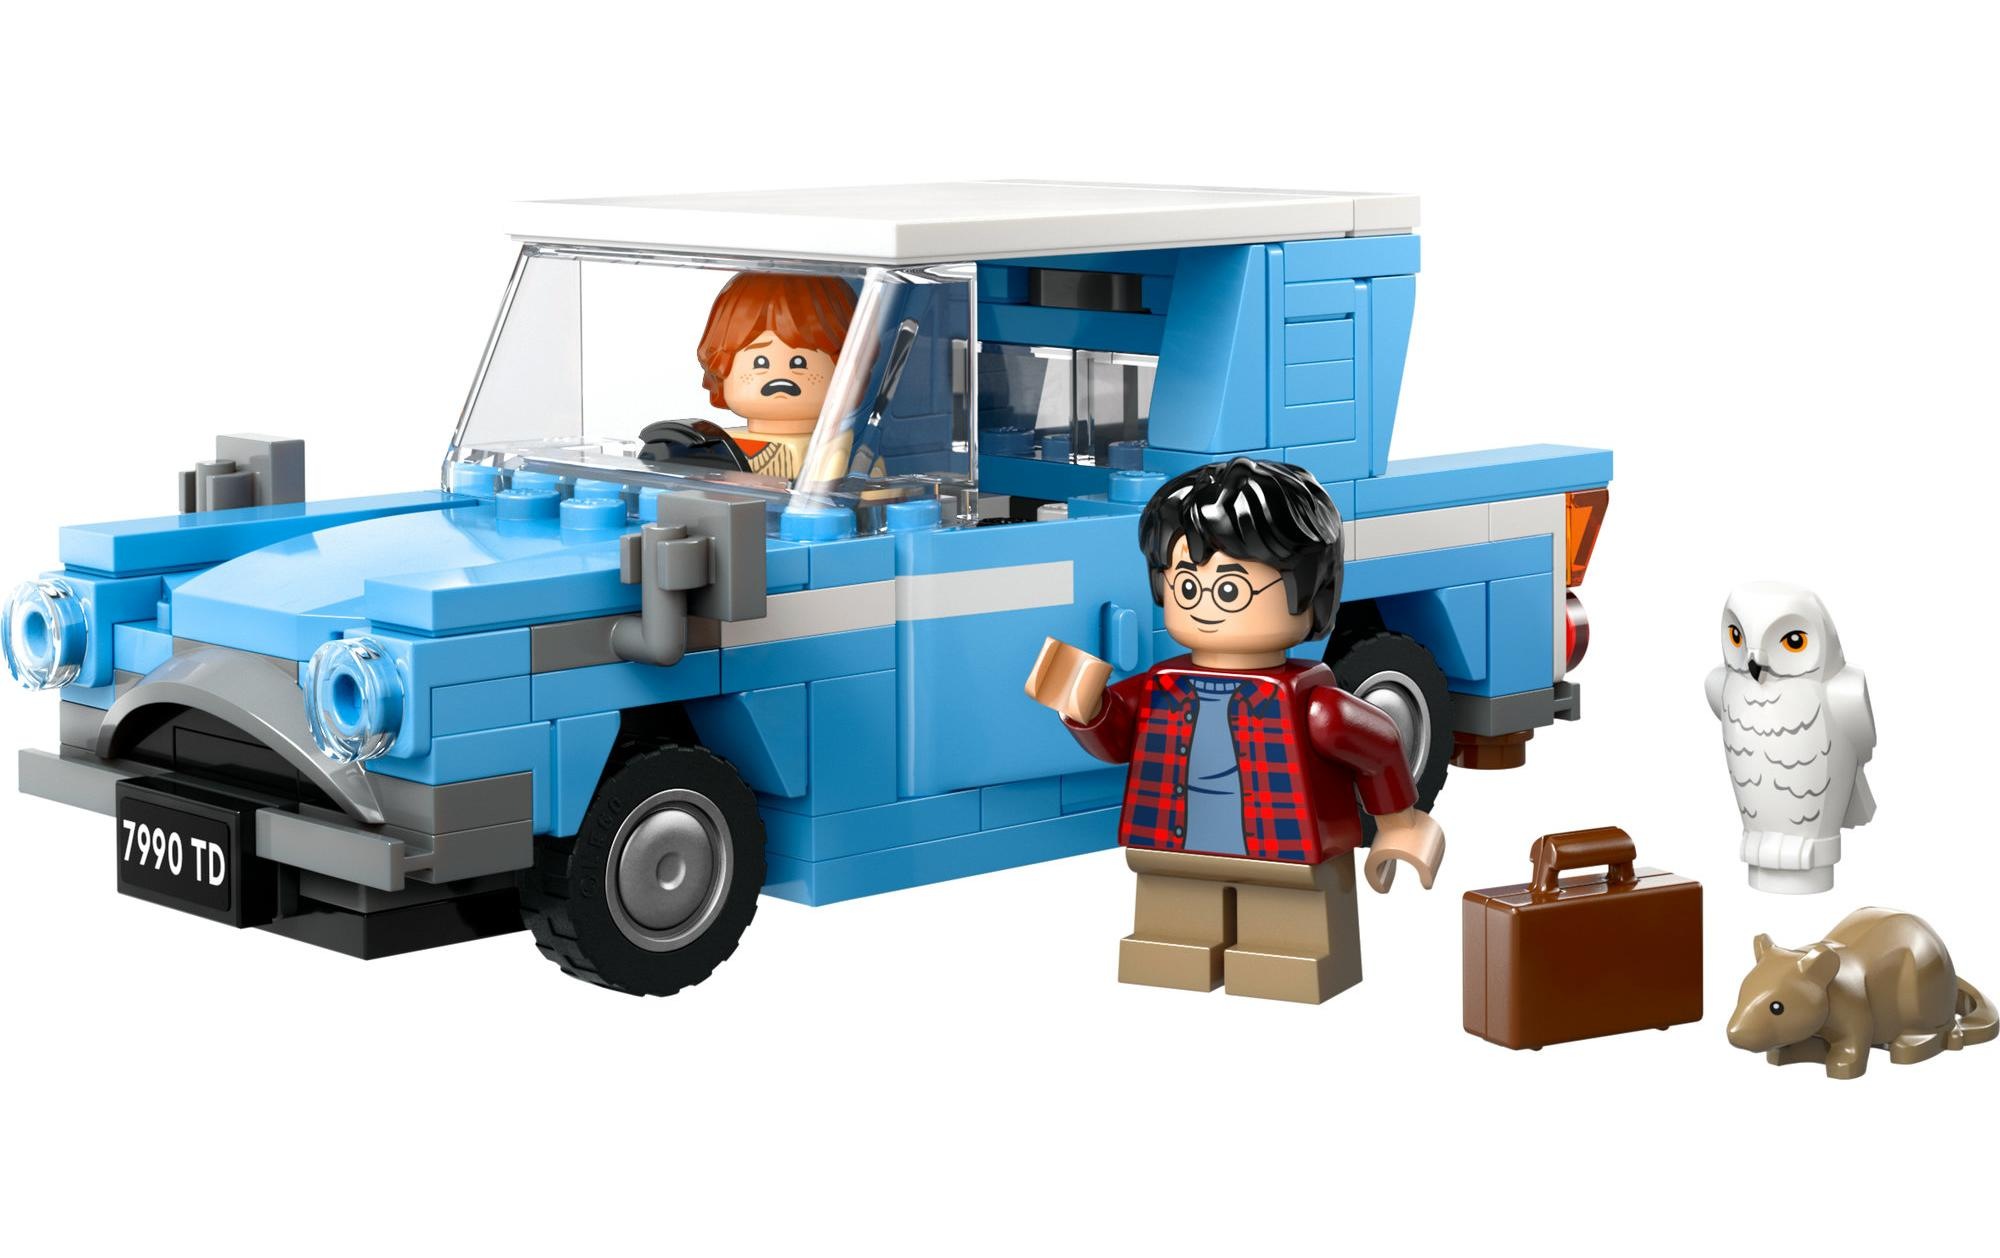 LEGO® Spielbausteine »Harry Potter Fliegender Ford Anglia 76424«, (165 St.)